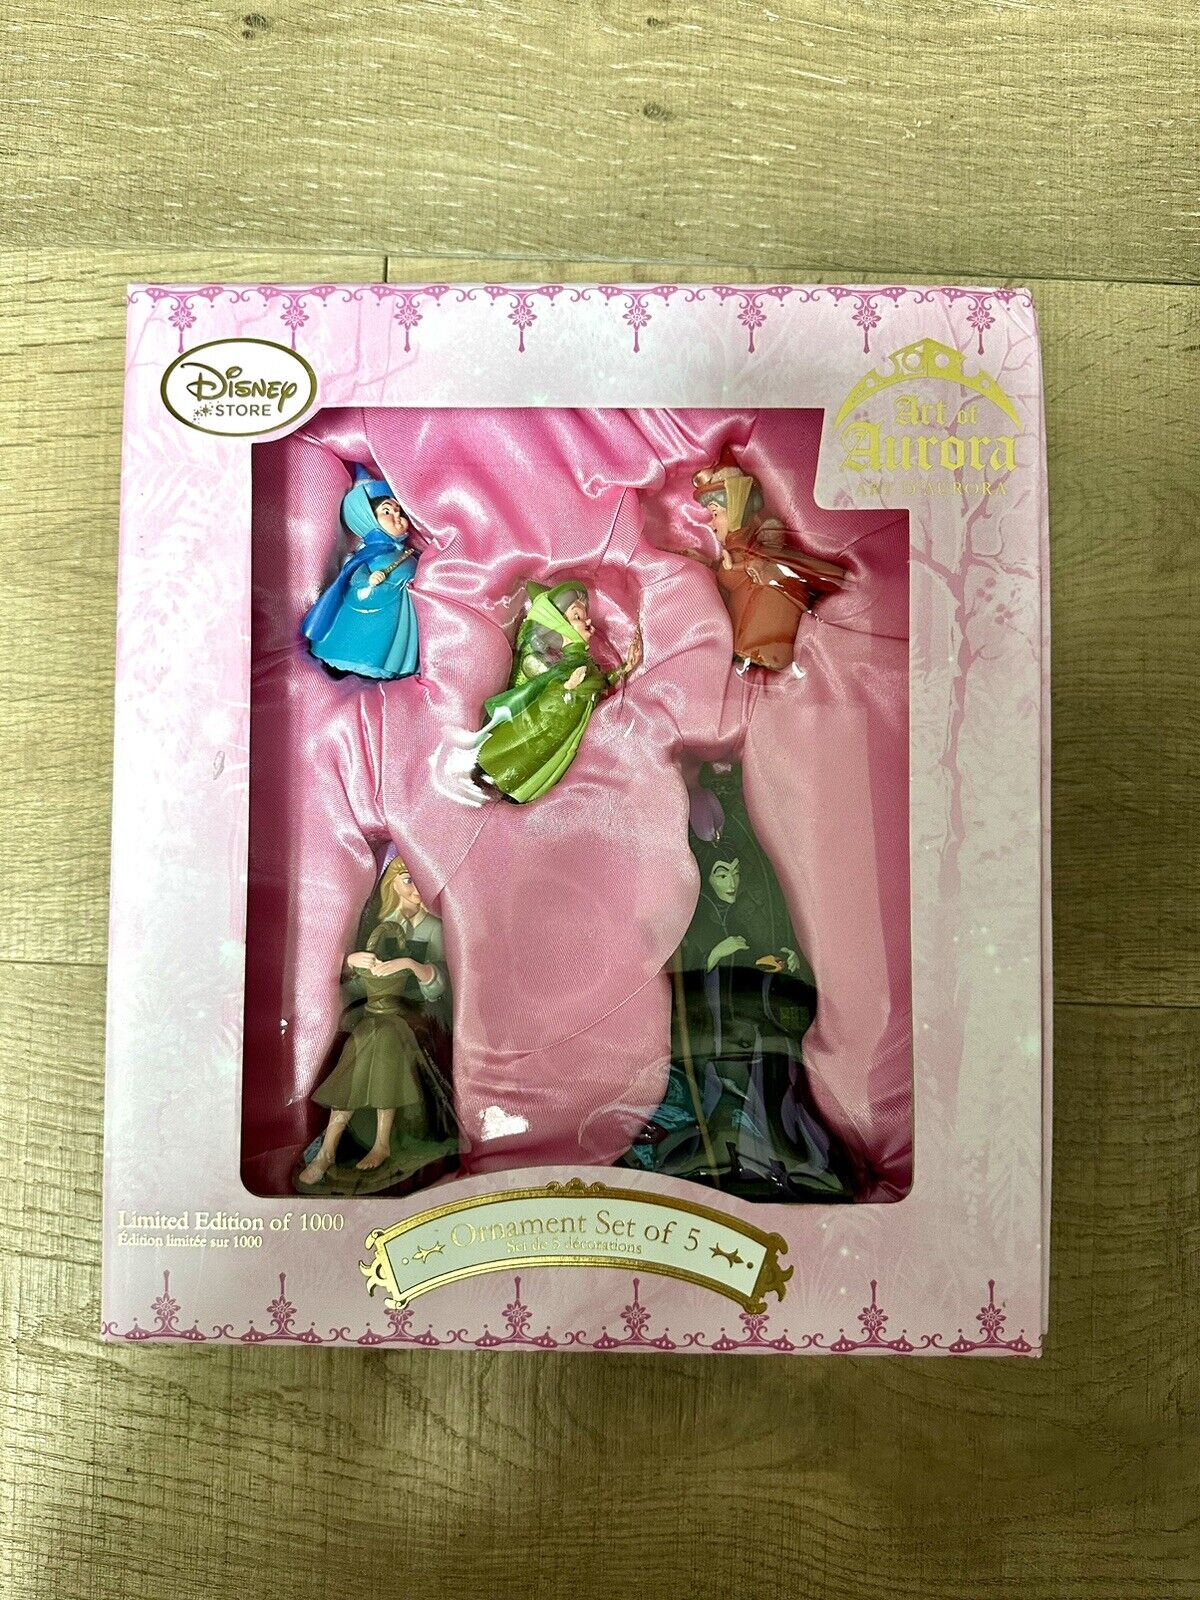 Disney Store Art of Aurora Limited Edition Ornament Set, Brand New In Box